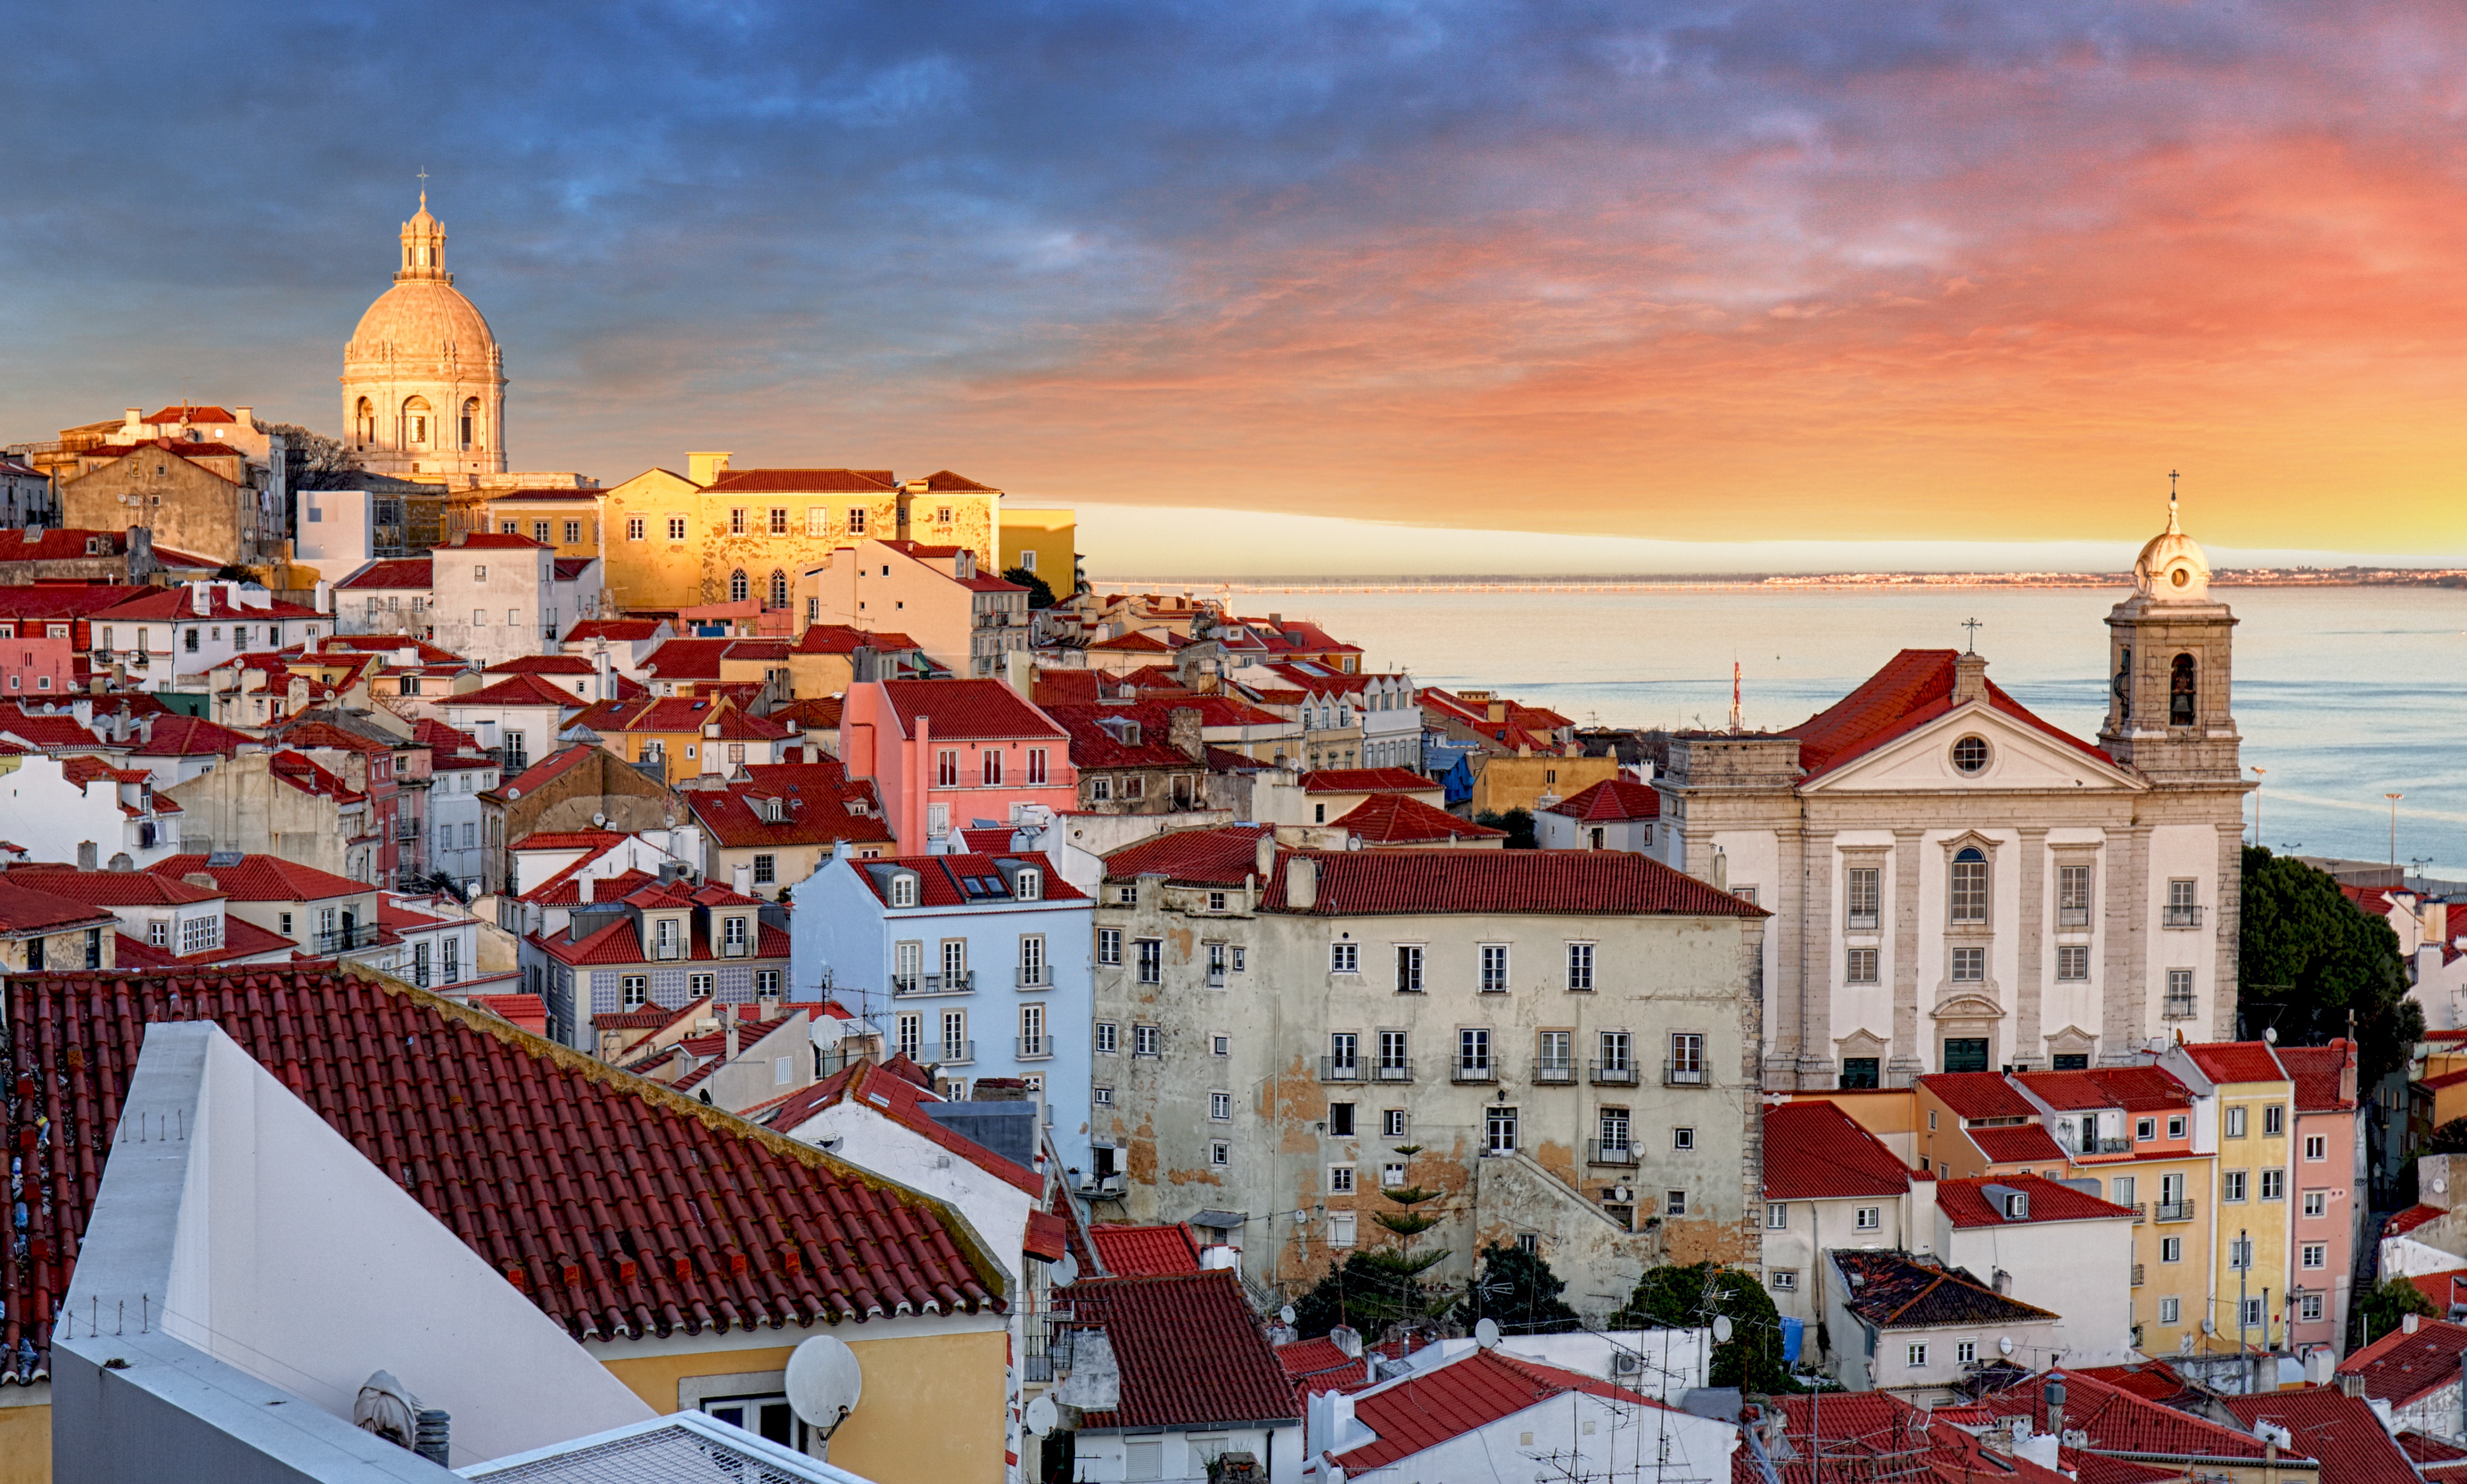 Destination image of Portugal